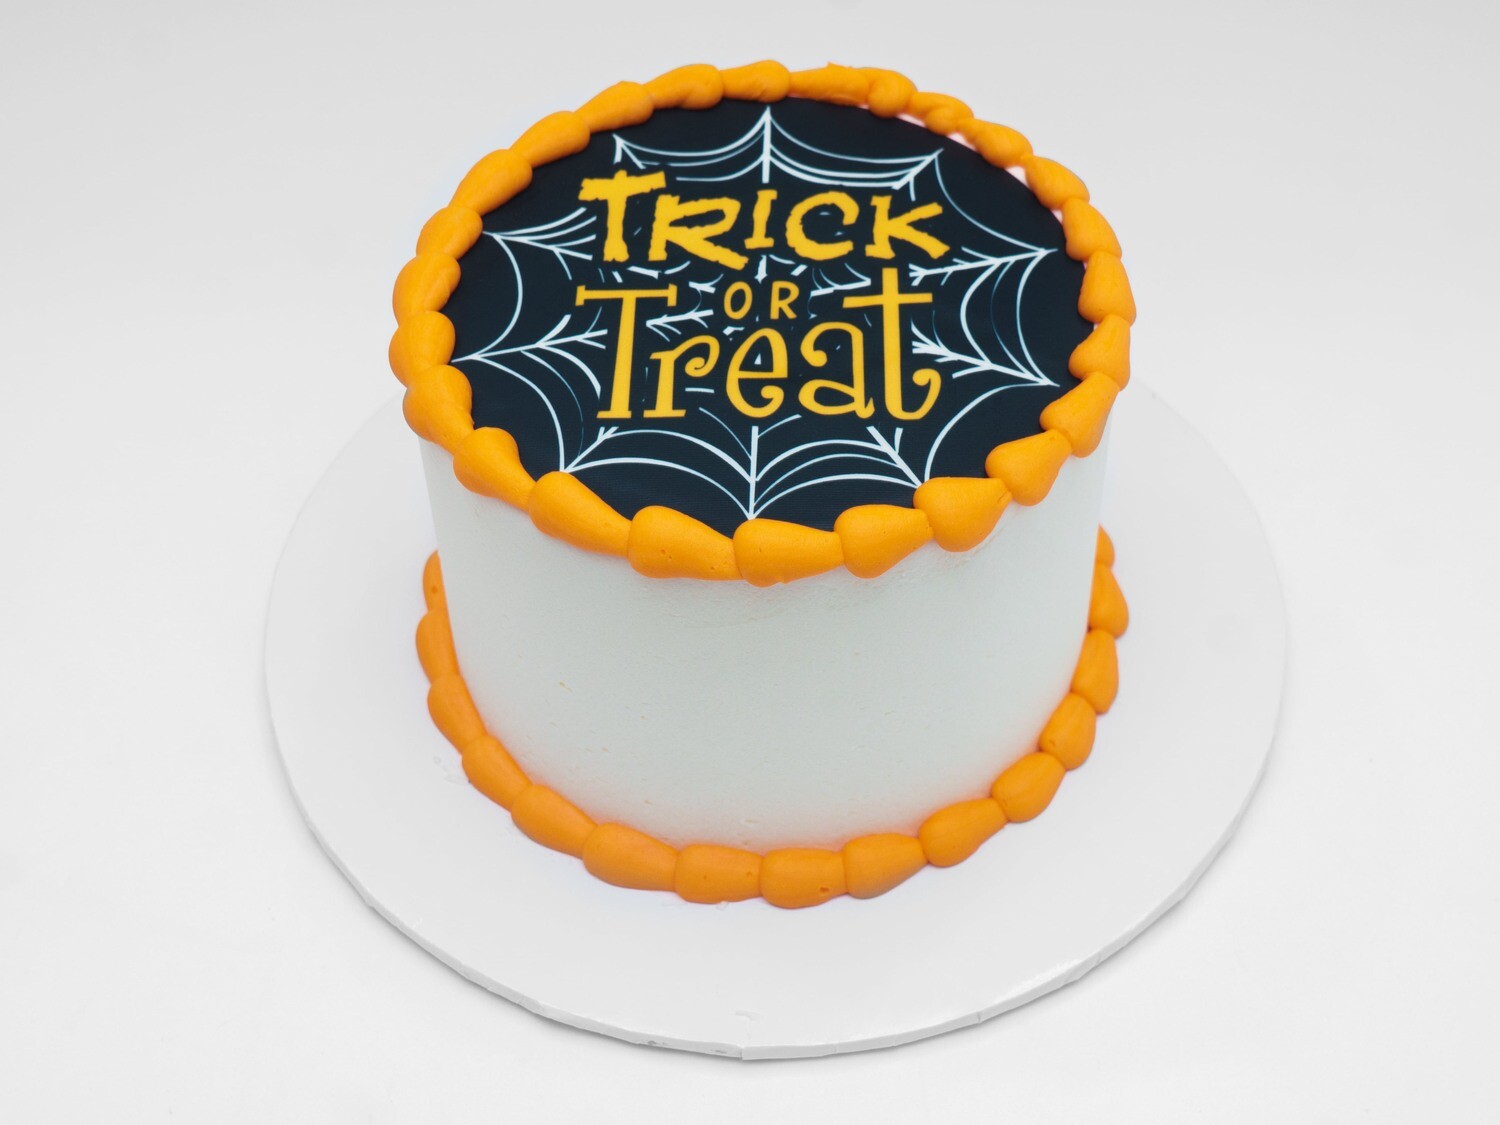 Trick or Treat Image Cake